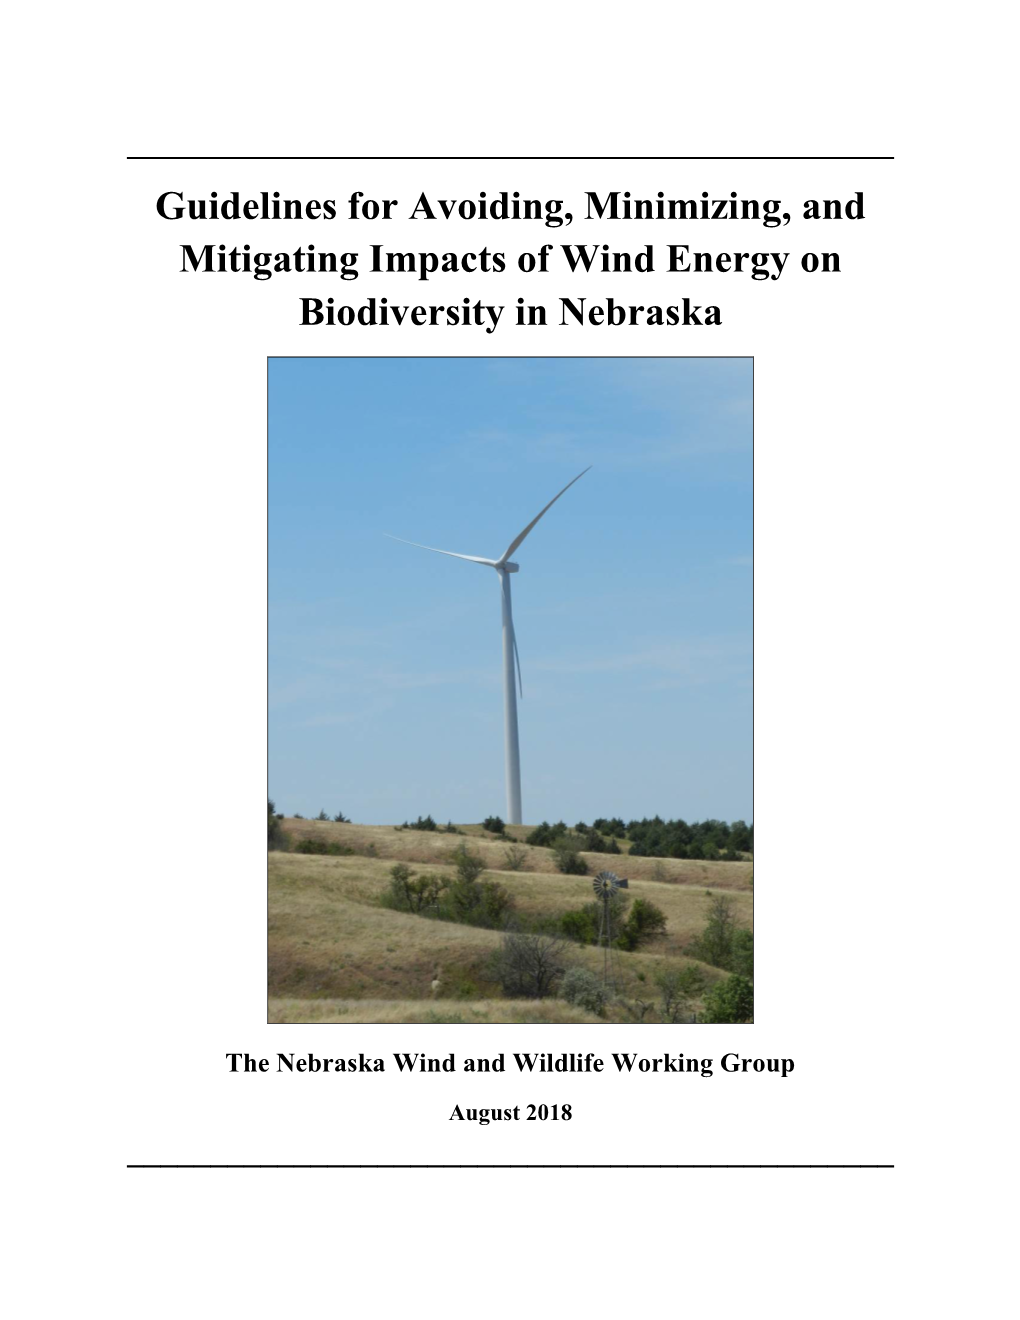 Guidelines for Avoiding, Minimizing, and Mitigating Impacts of Wind Energy on Biodiversity in Nebraska